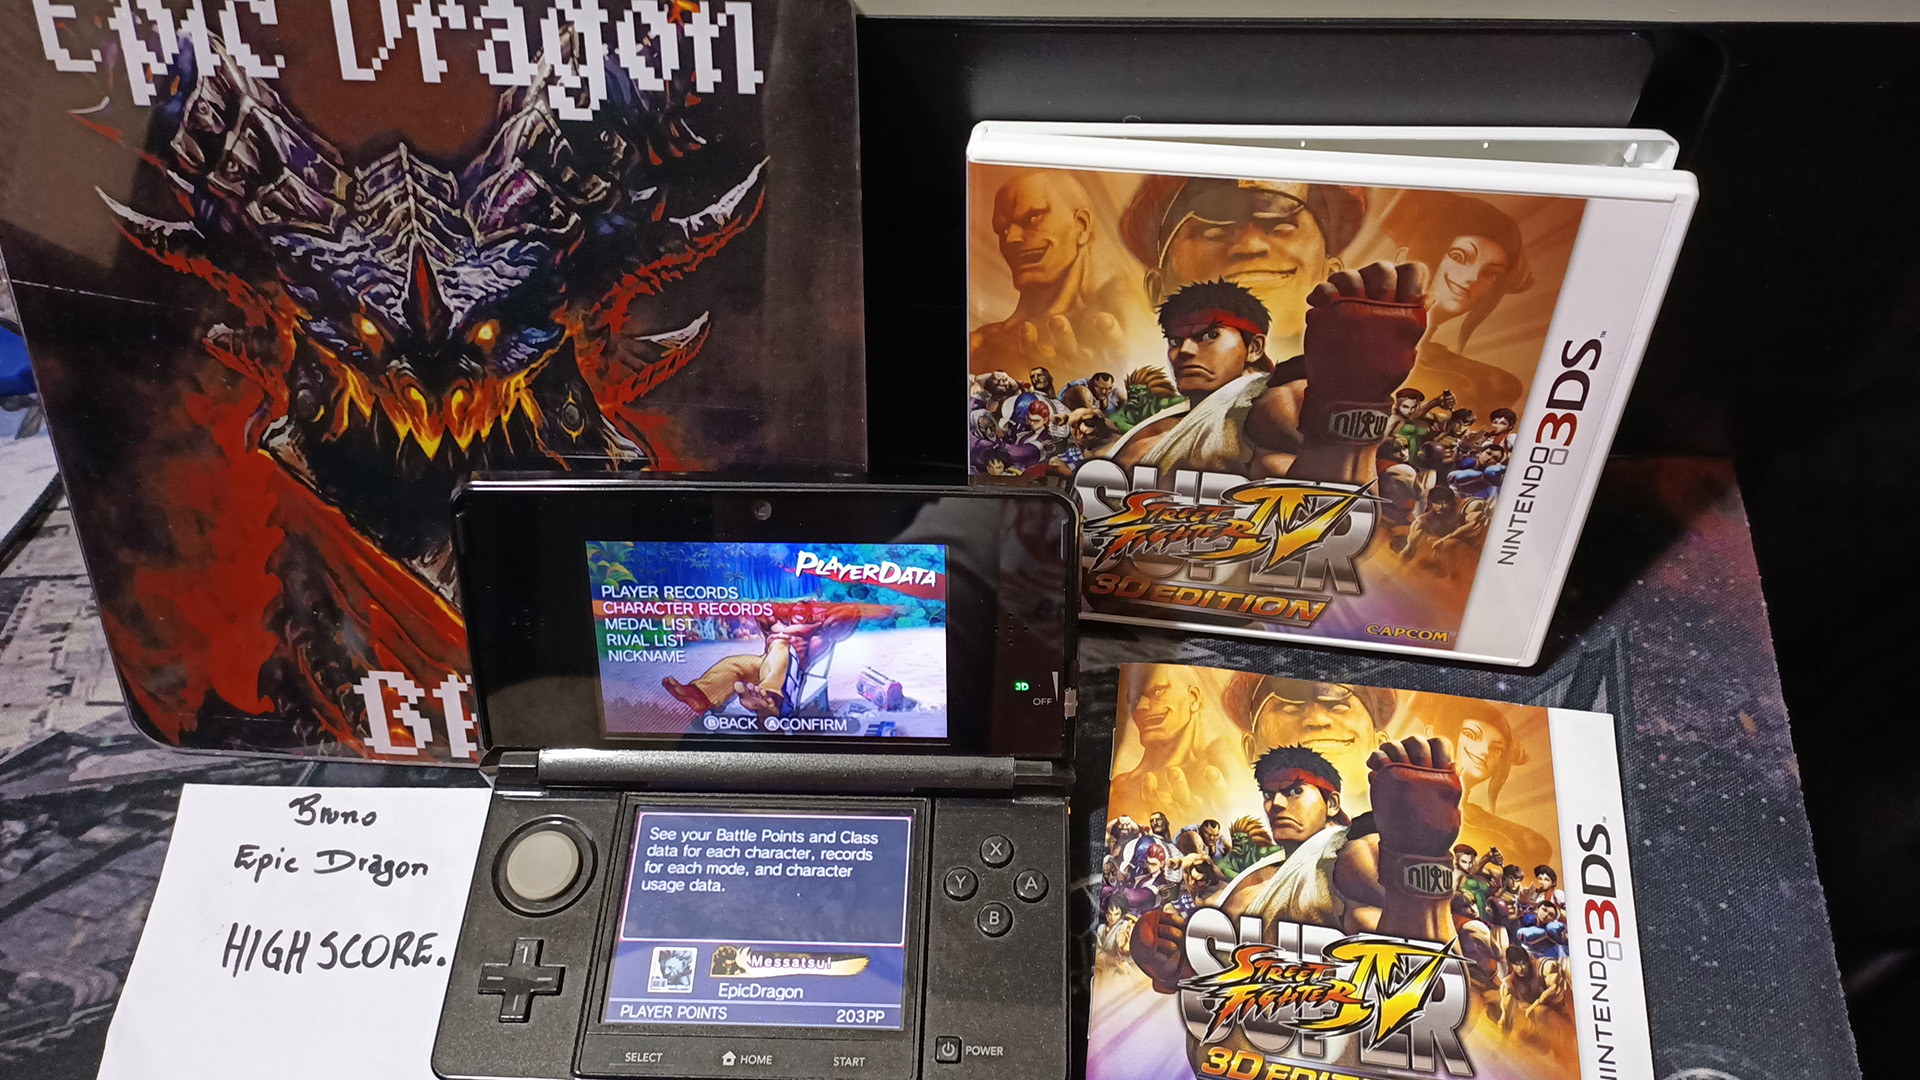 EpicDragon: Super Street Fighter IV 3D Edition: Challenge: Car Crusher: Makoto (Nintendo 3DS) 83,300 points on 2022-08-11 17:34:44